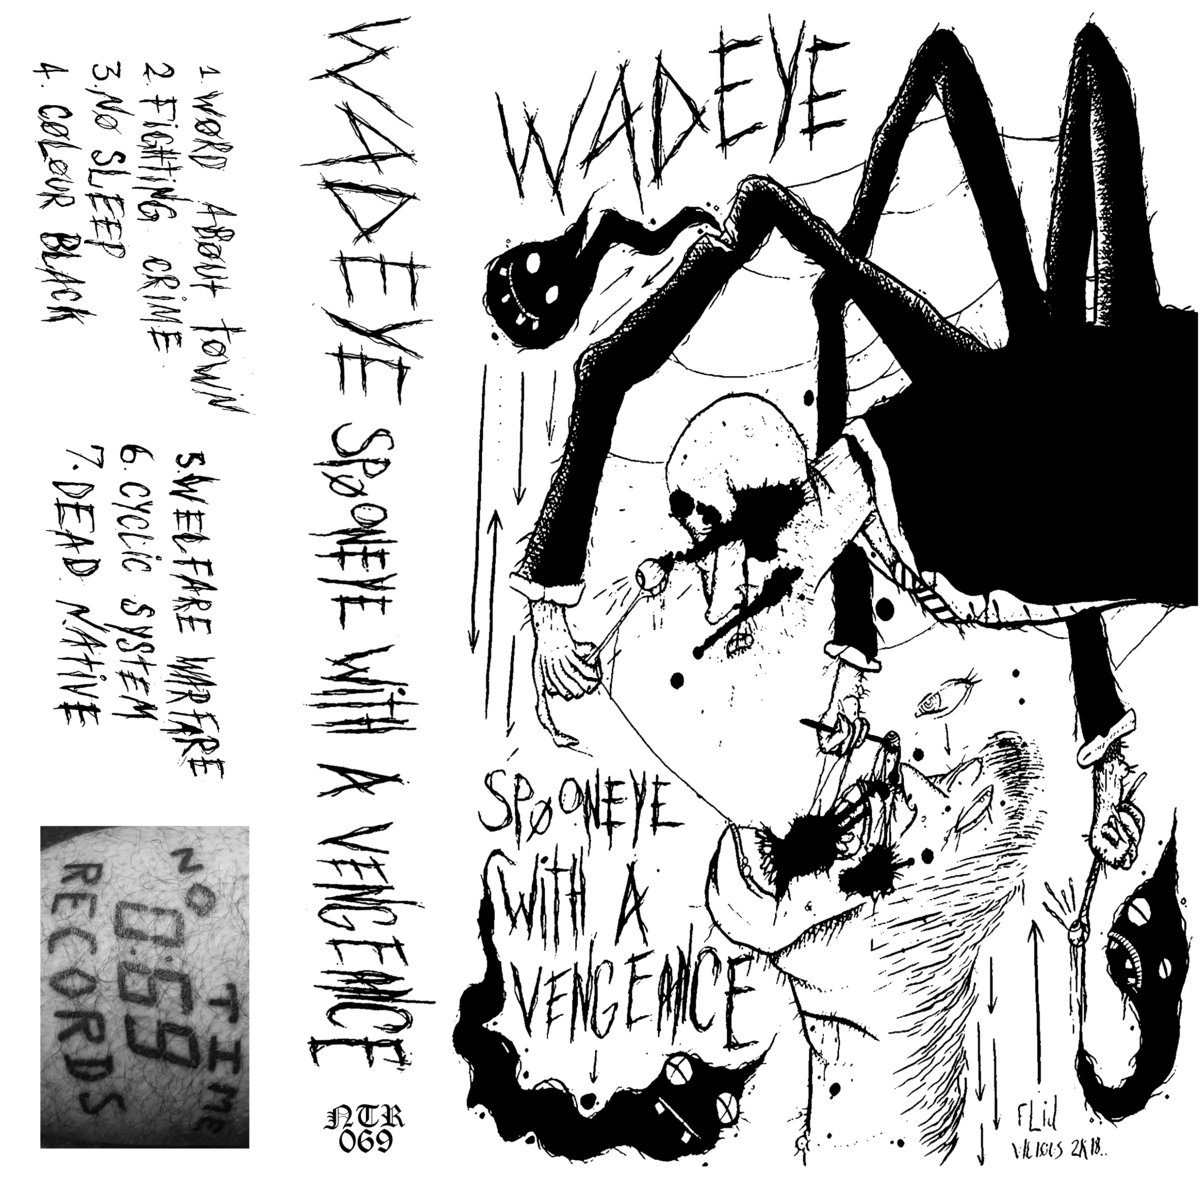 Wadeye - Spooneye With A Vengence Cass